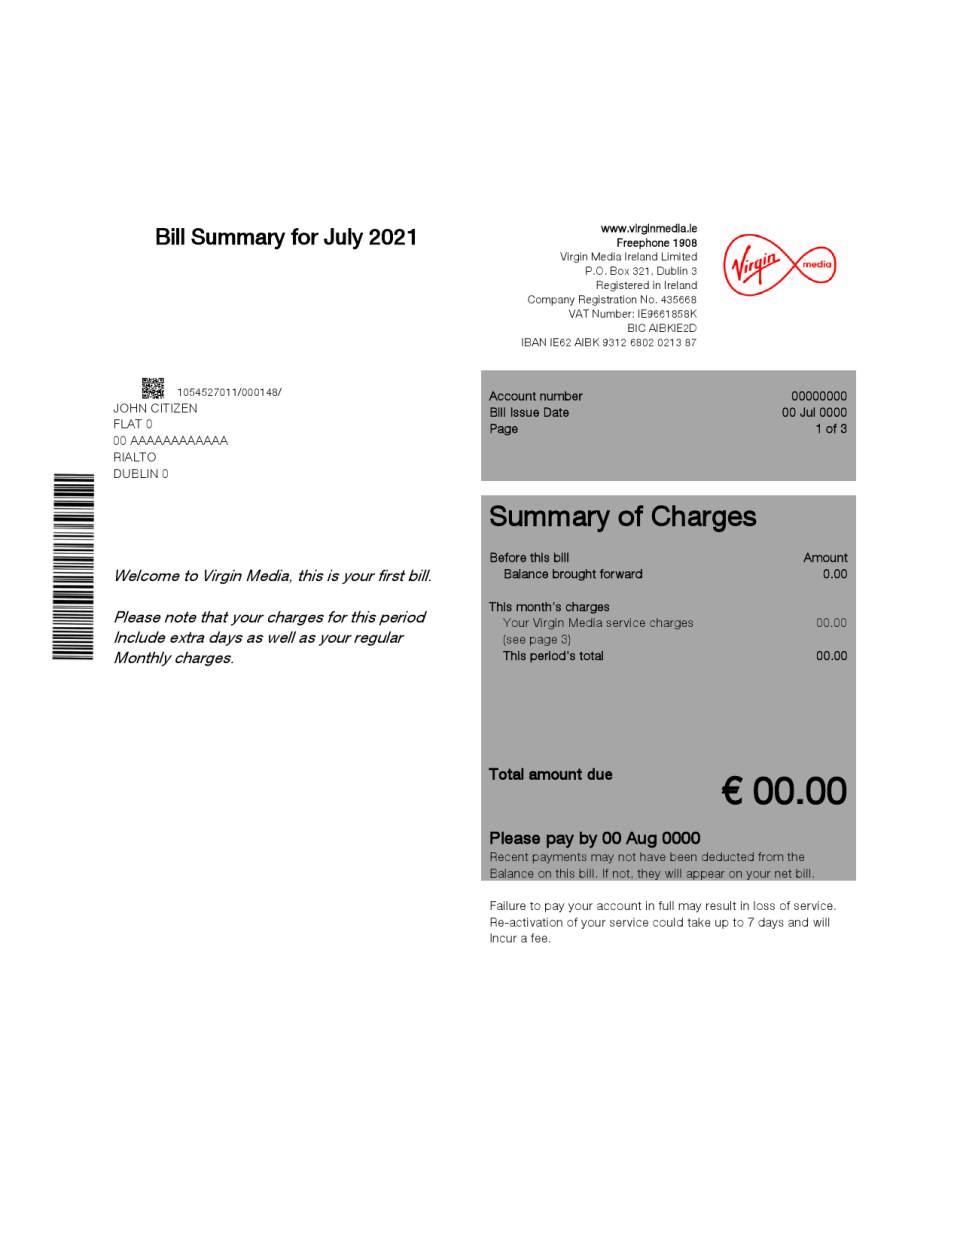 Ireland Virgin Media utility bill template in Word and PDF format, version 2